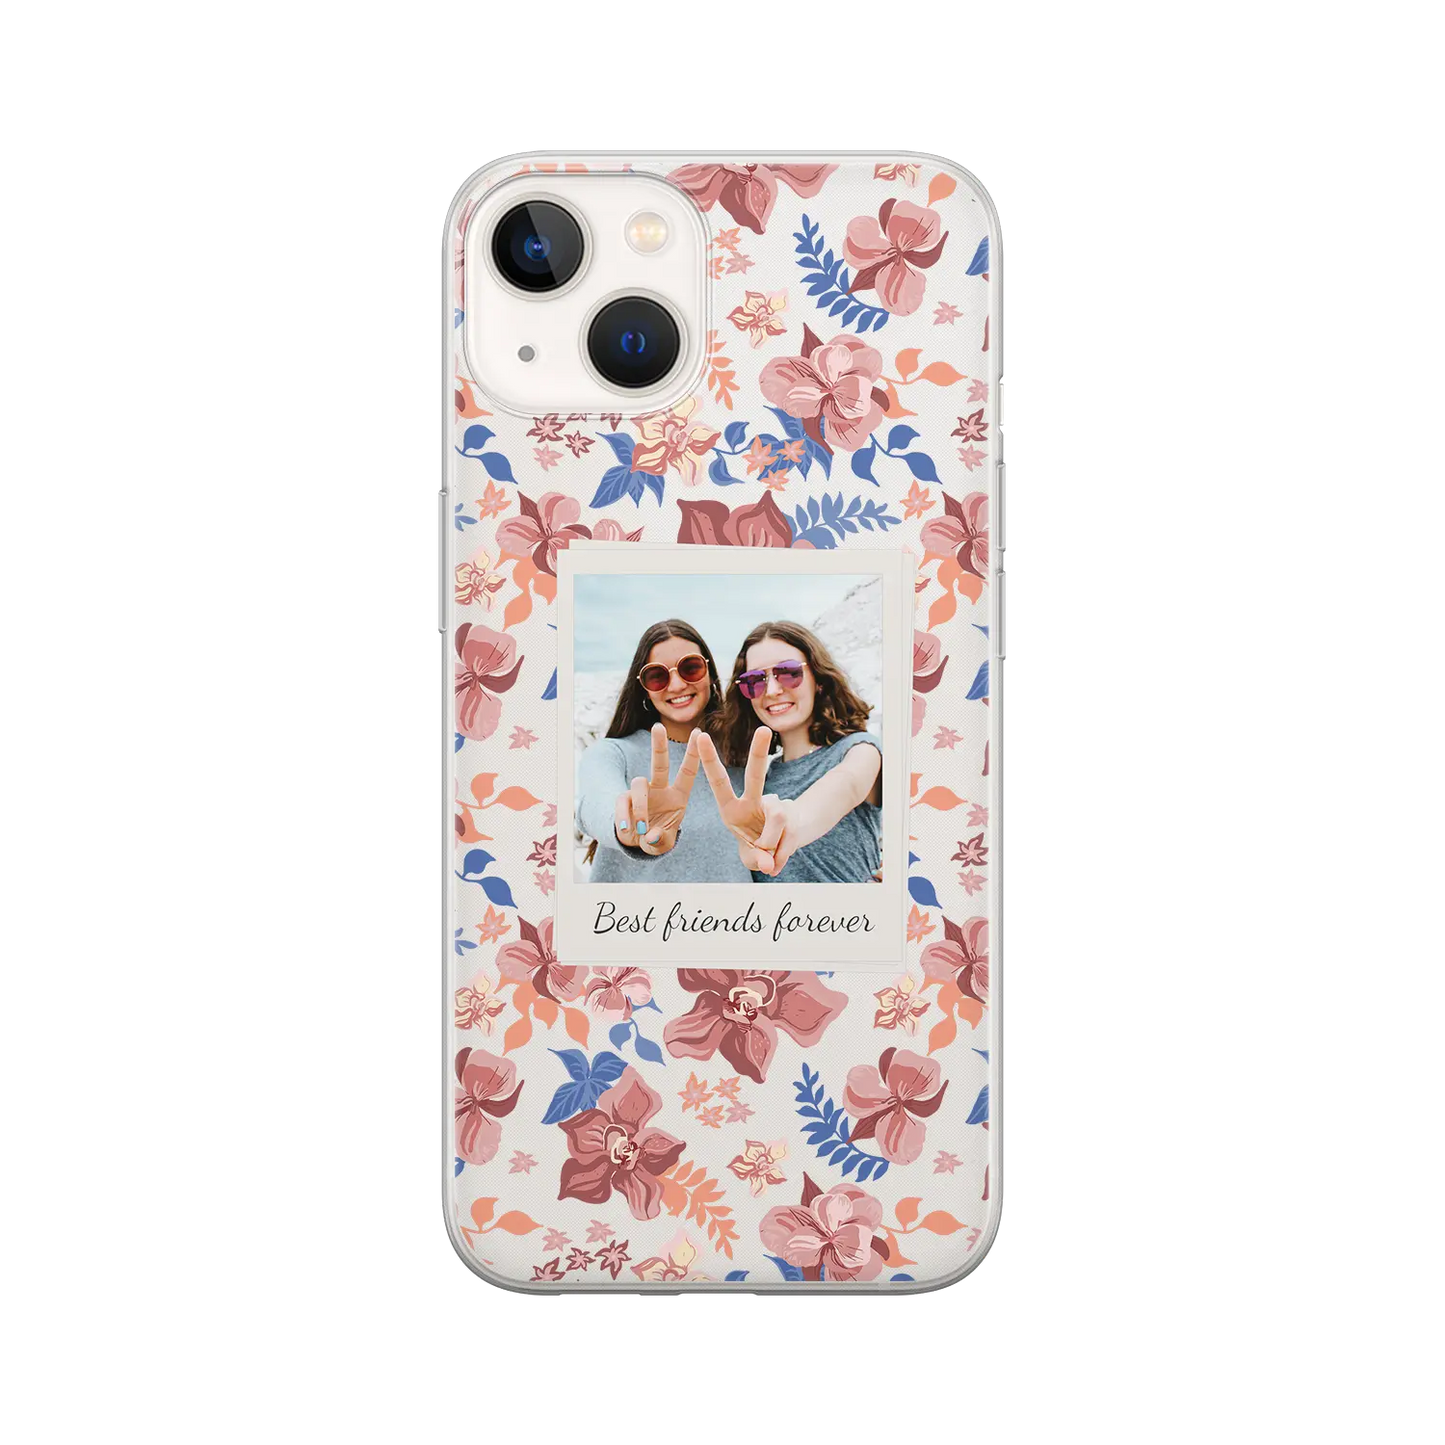 Flower Secrets - Custom iPhone Case